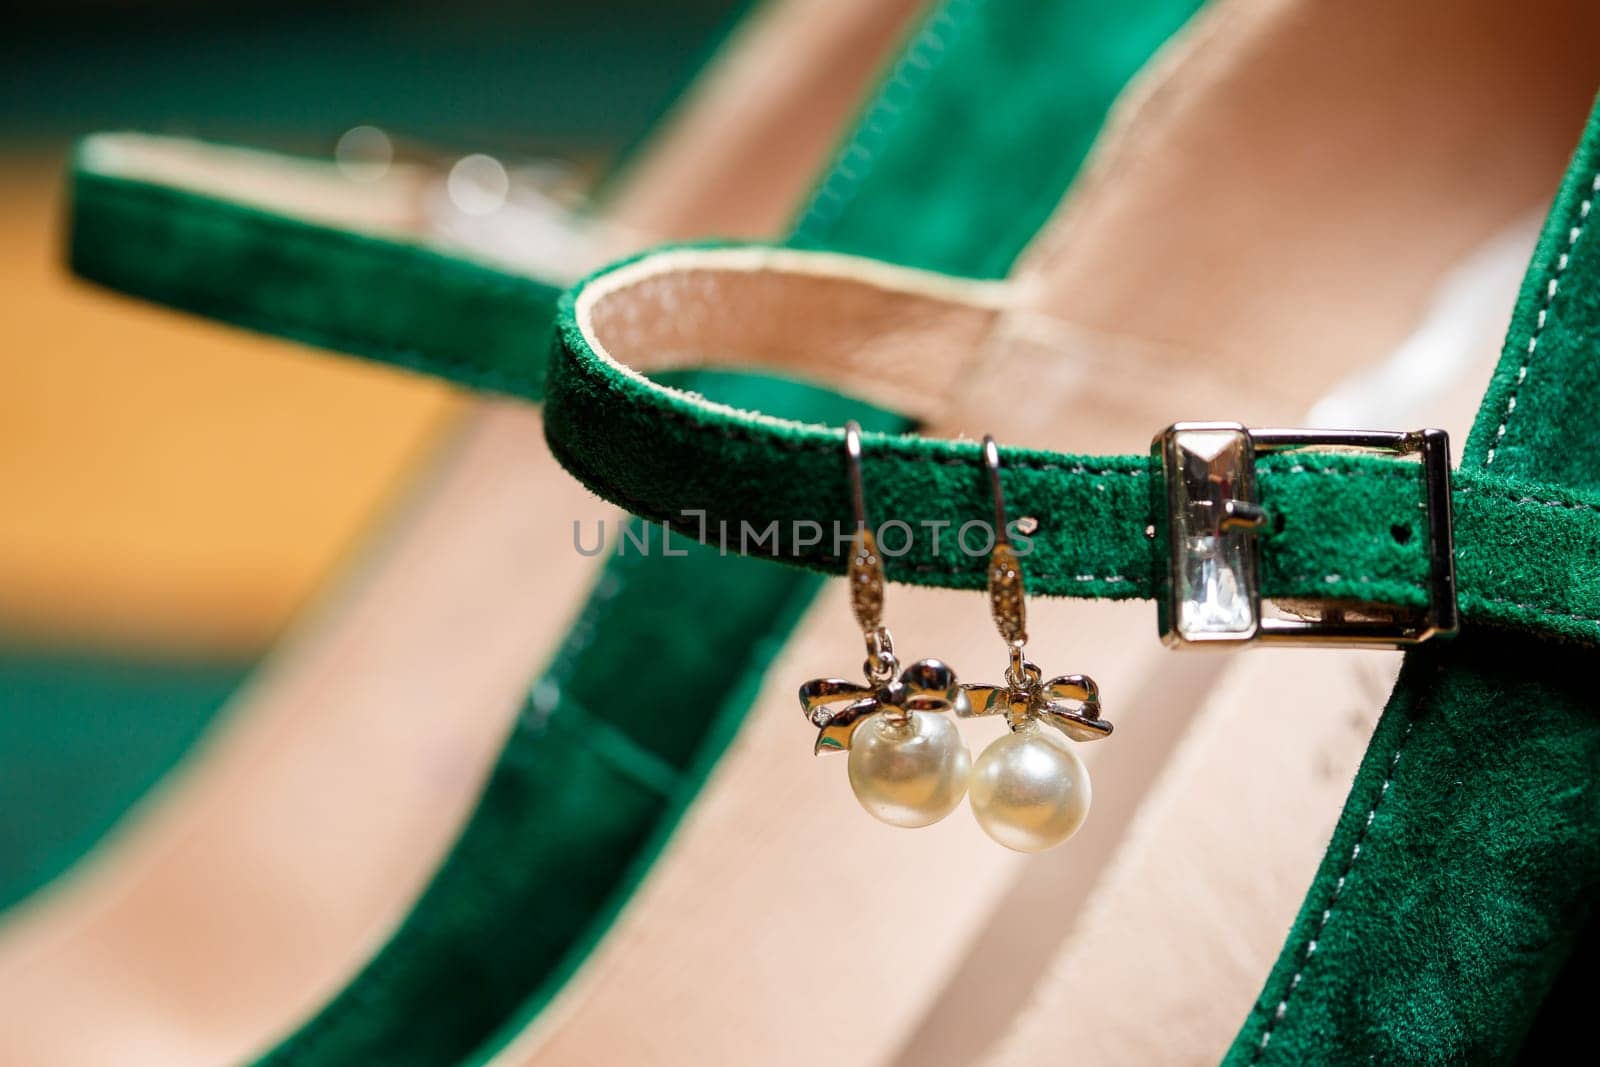 wedding accessories bride on the wedding day by Dmitrytph